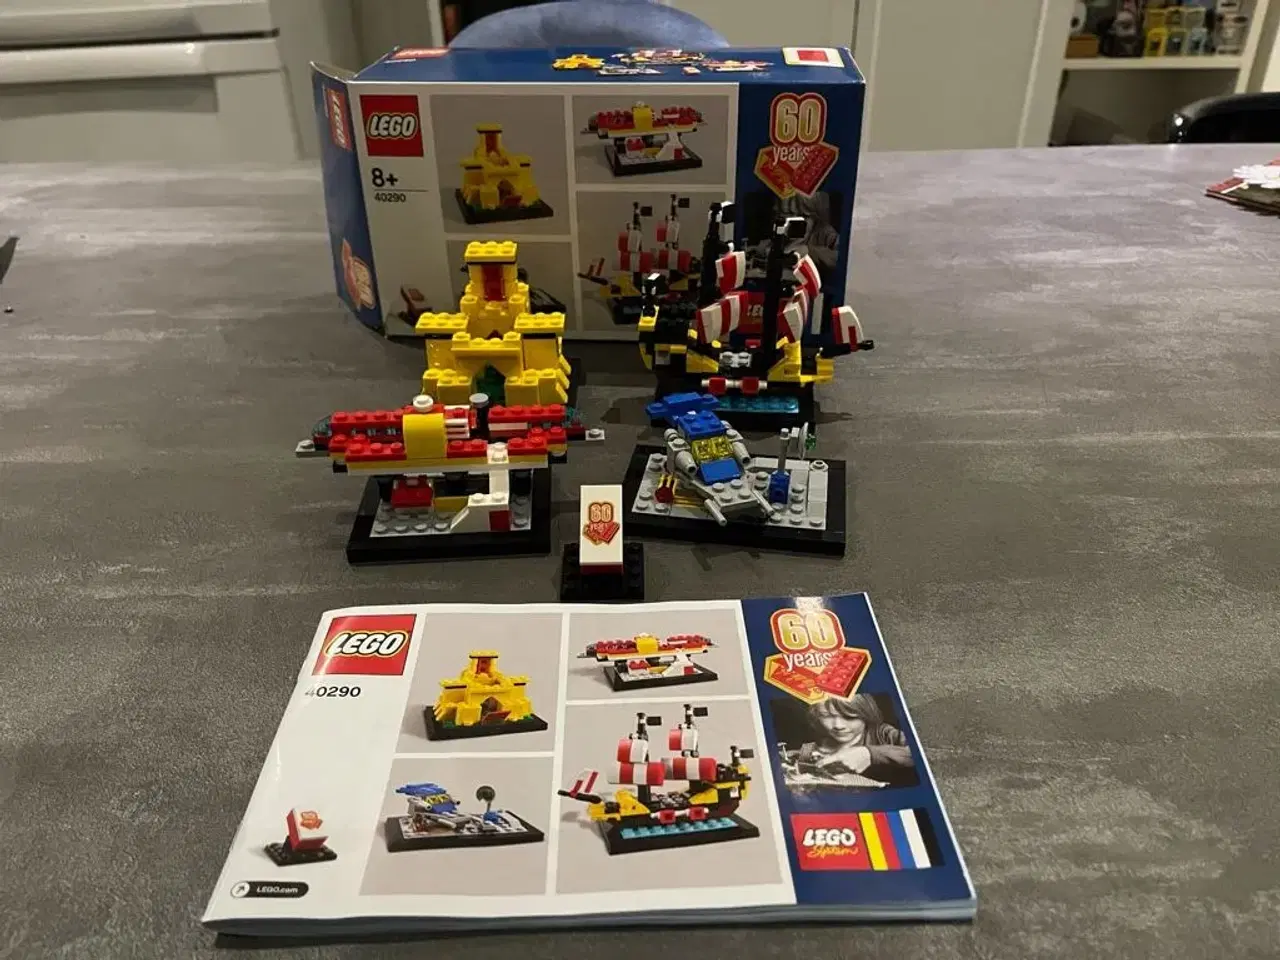 Billede 2 - LEGO 60 Years Of The LEGO Brick